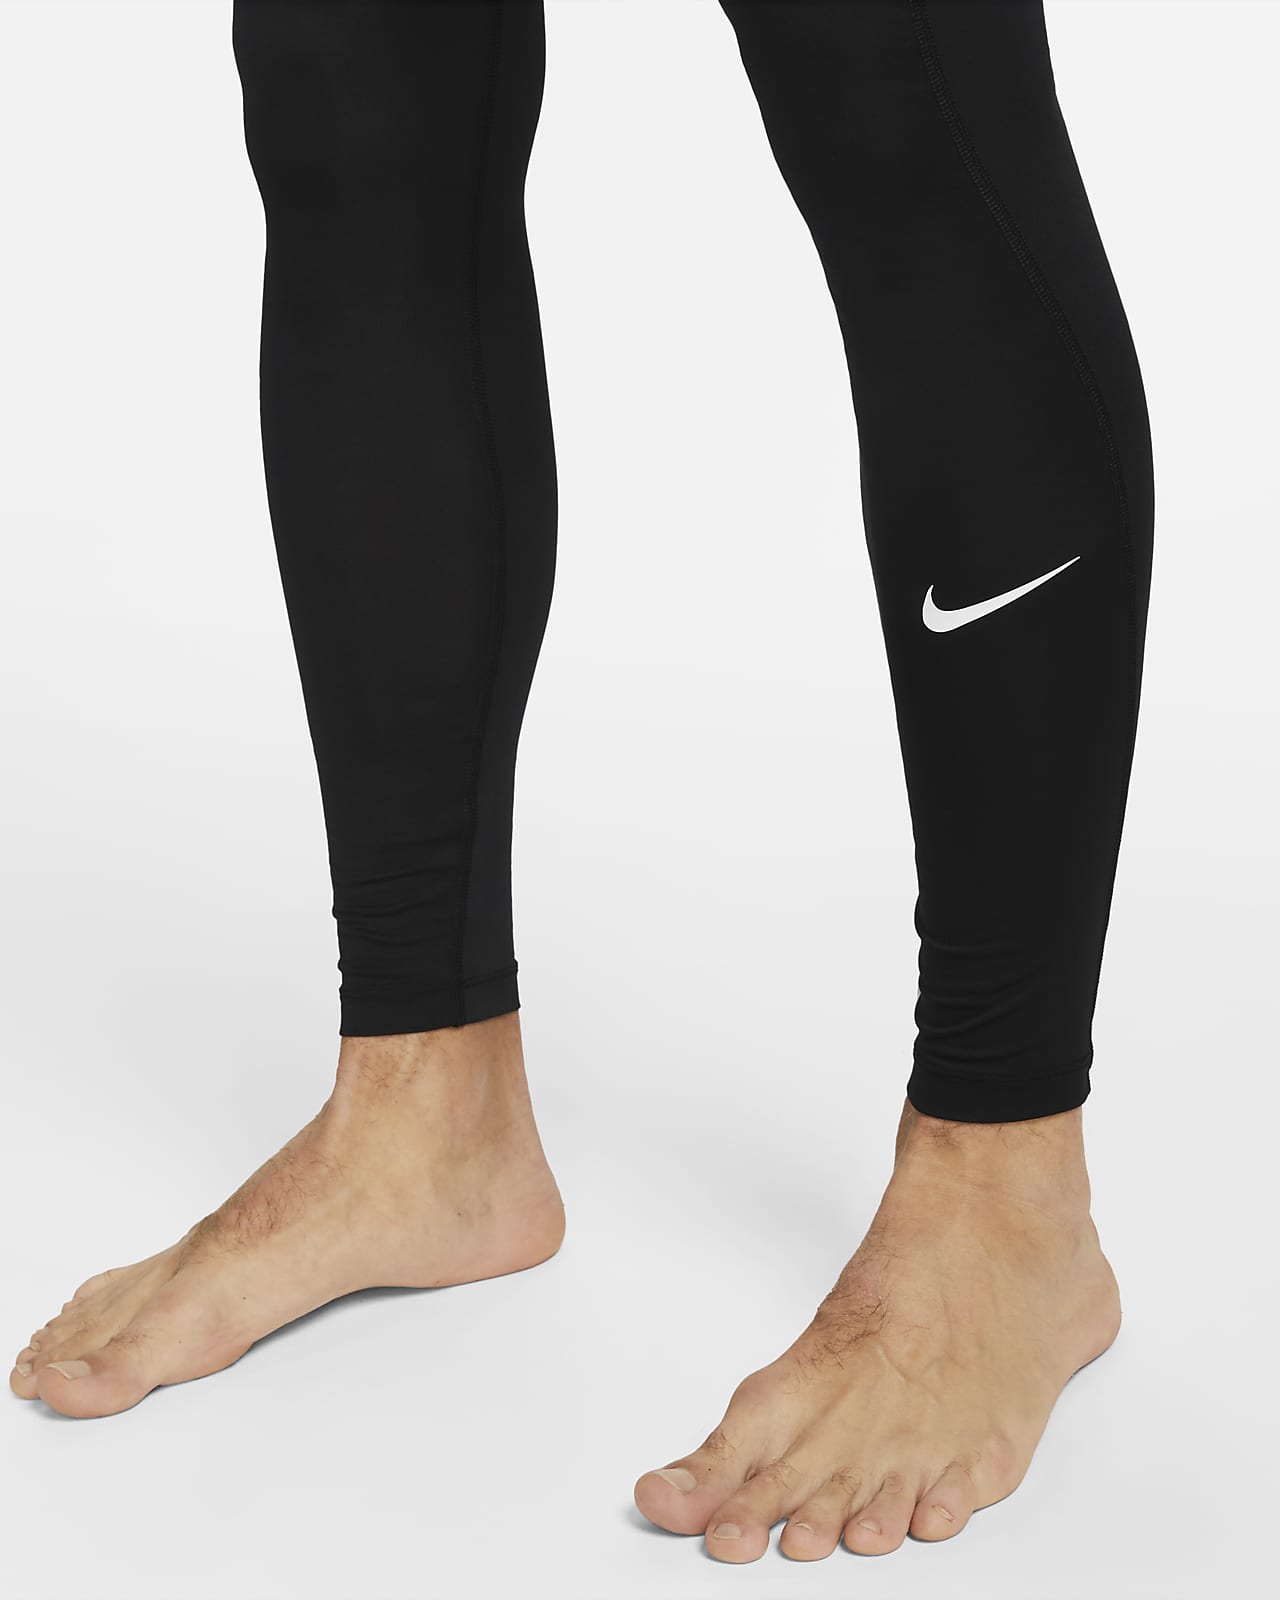  Nike Pro Hyperwarm Women's Compression Tights Black